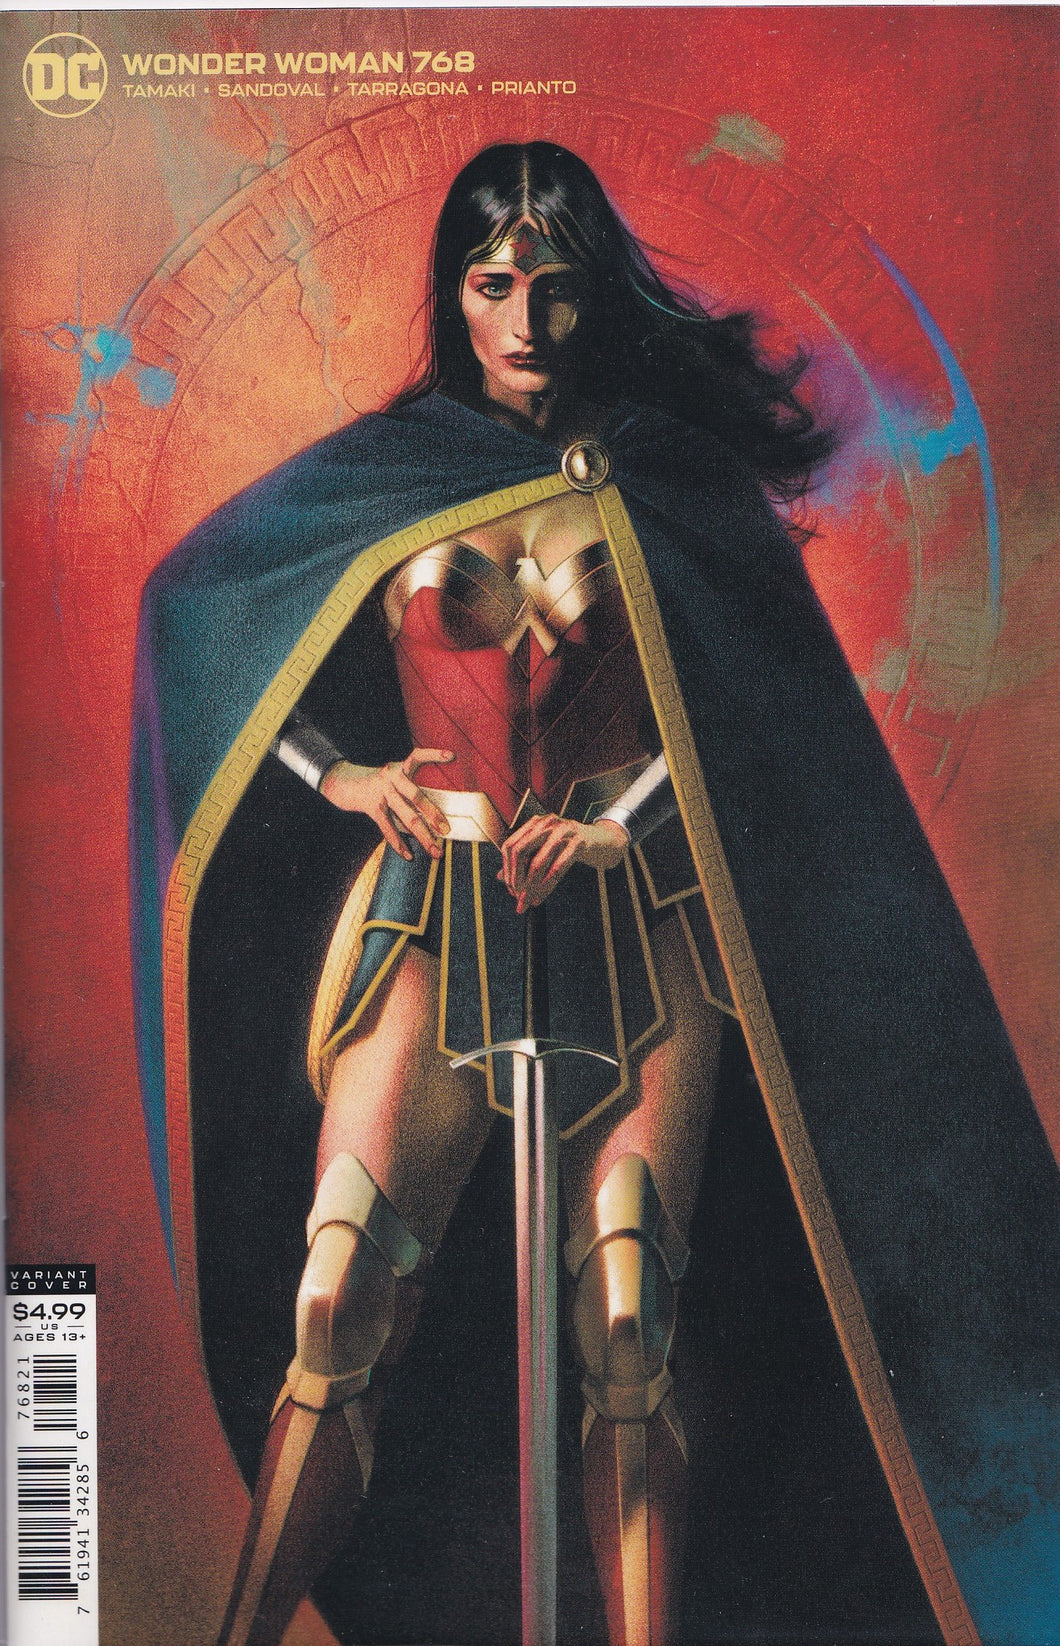 WONDER WOMAN #768 (JOSH MIDDLETON VARIANT)(2020) COMIC BOOK ~ DC Comics